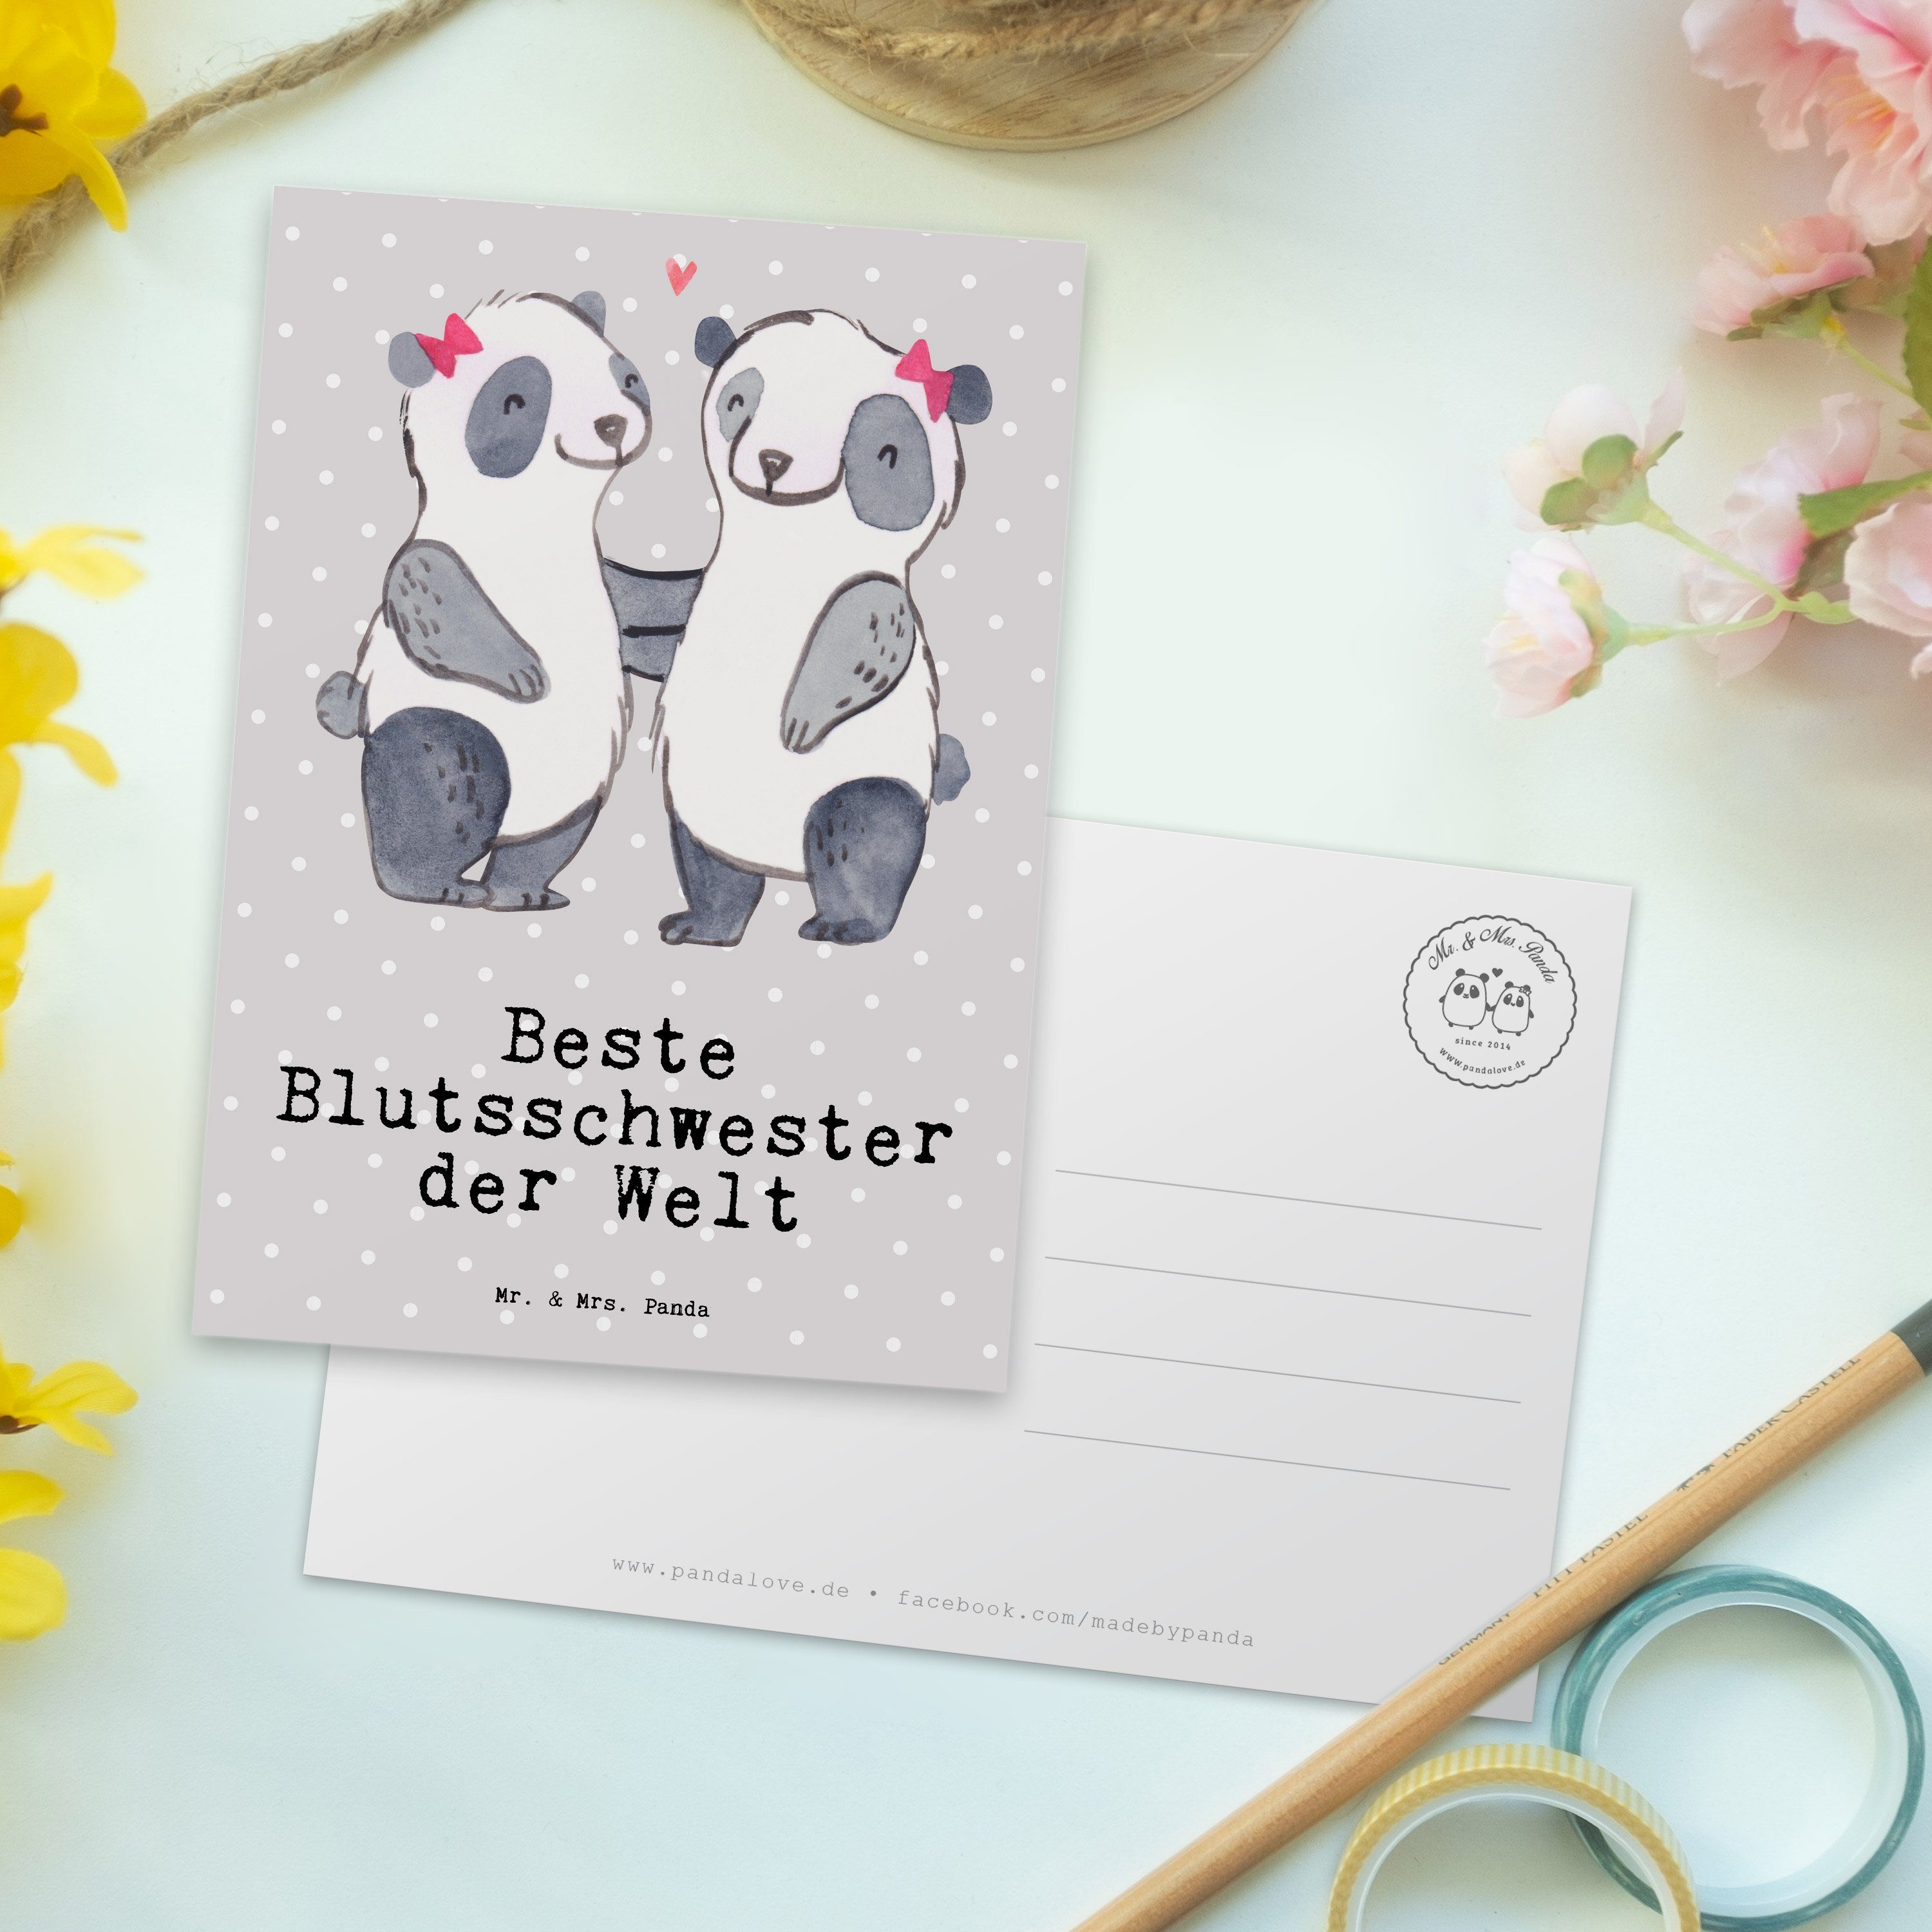 Mr. & Mrs. Pastell Geburt der Geschenk, Panda Postkarte Blutsschwester - Grau - Panda Beste Welt